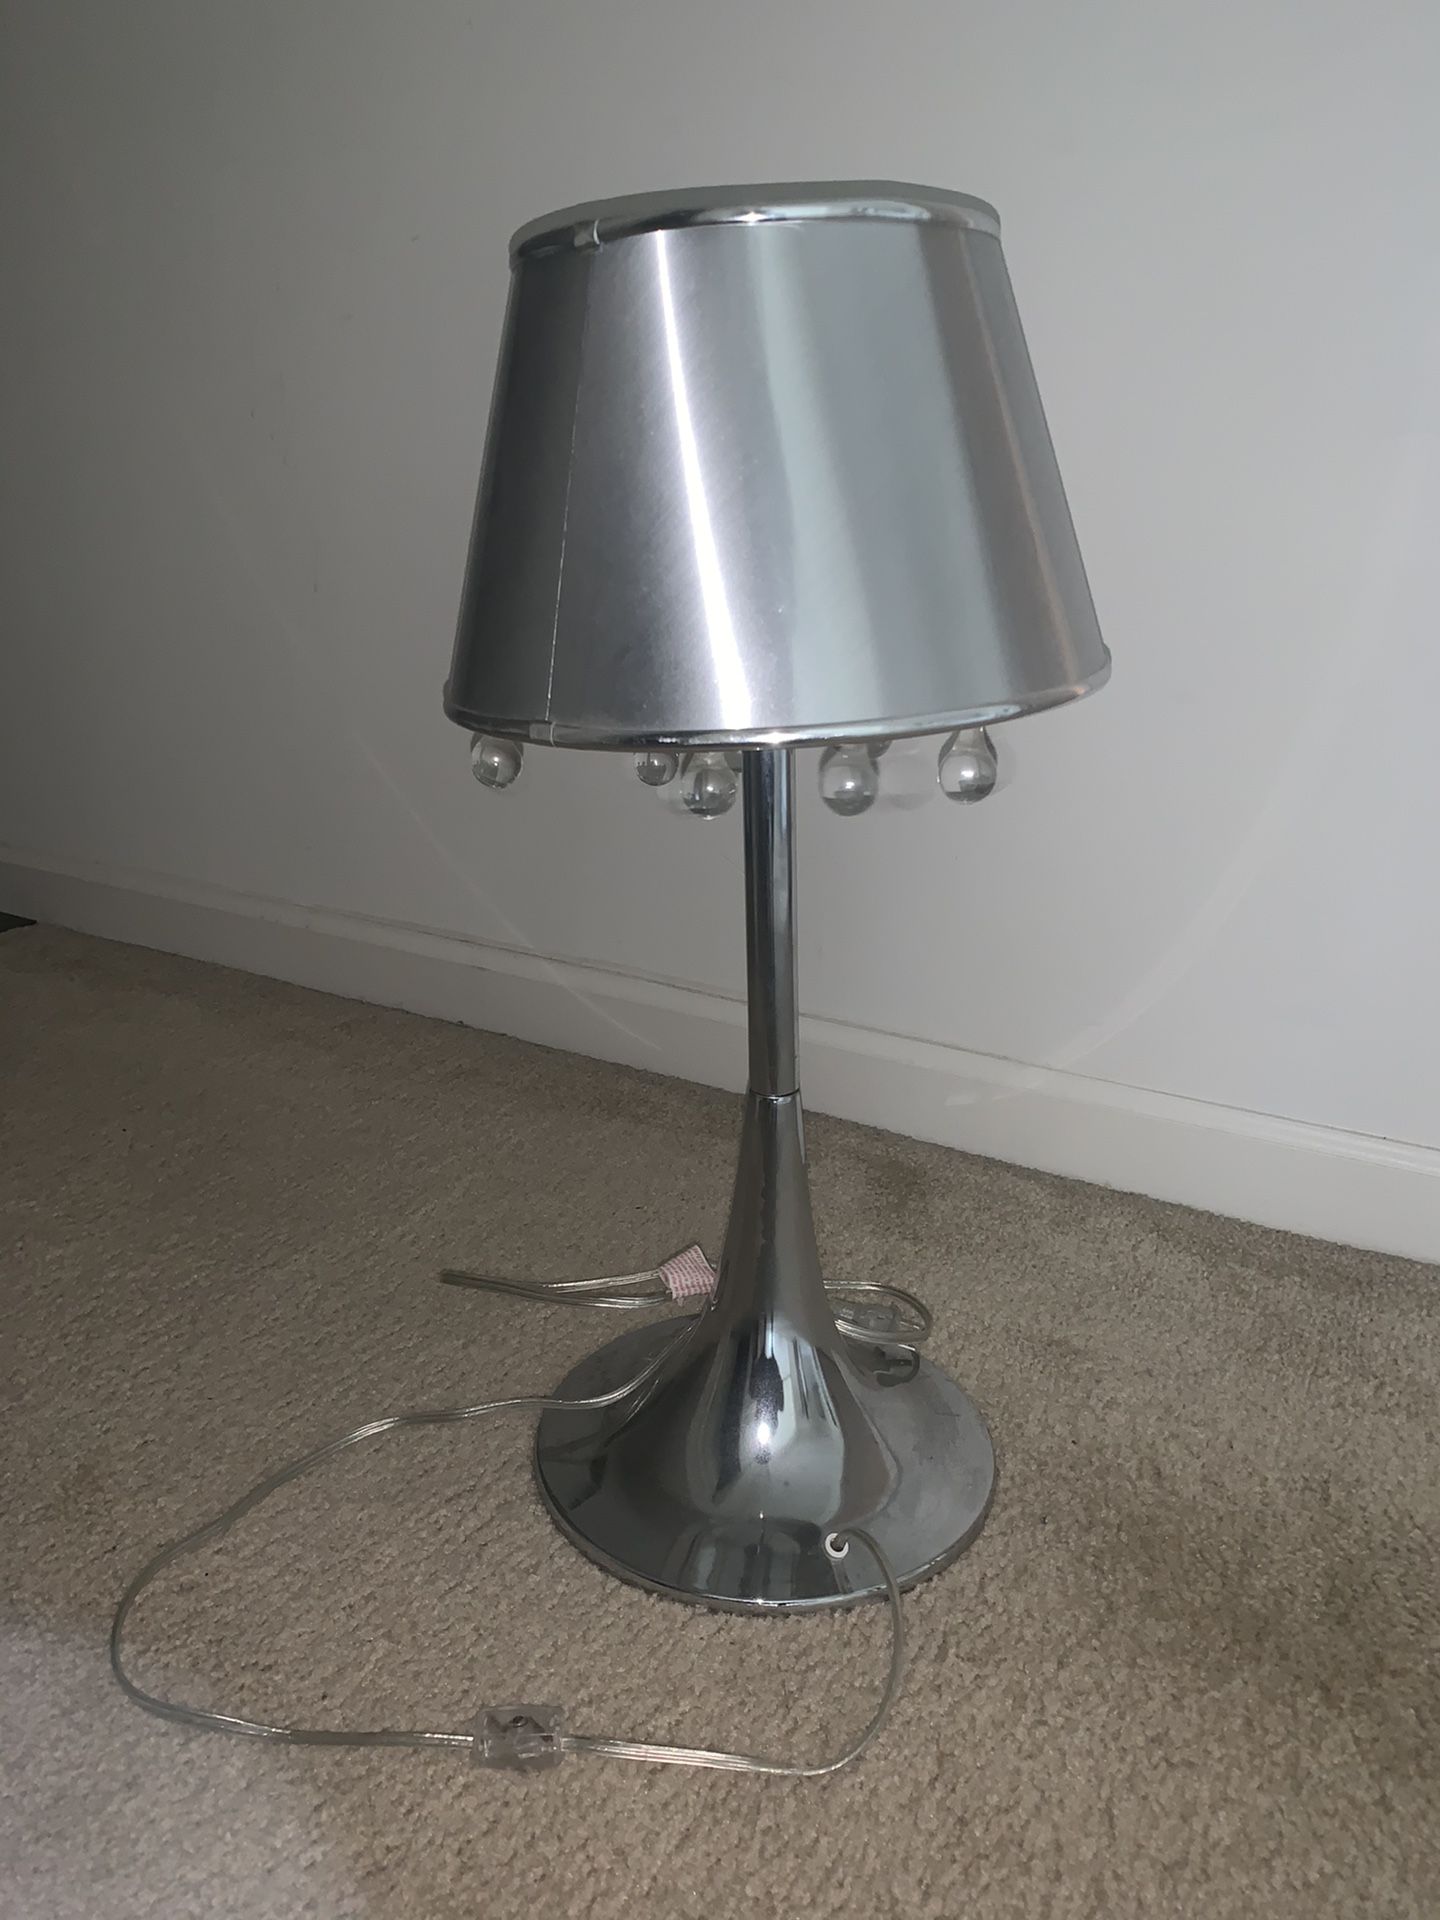 1 single Lamp